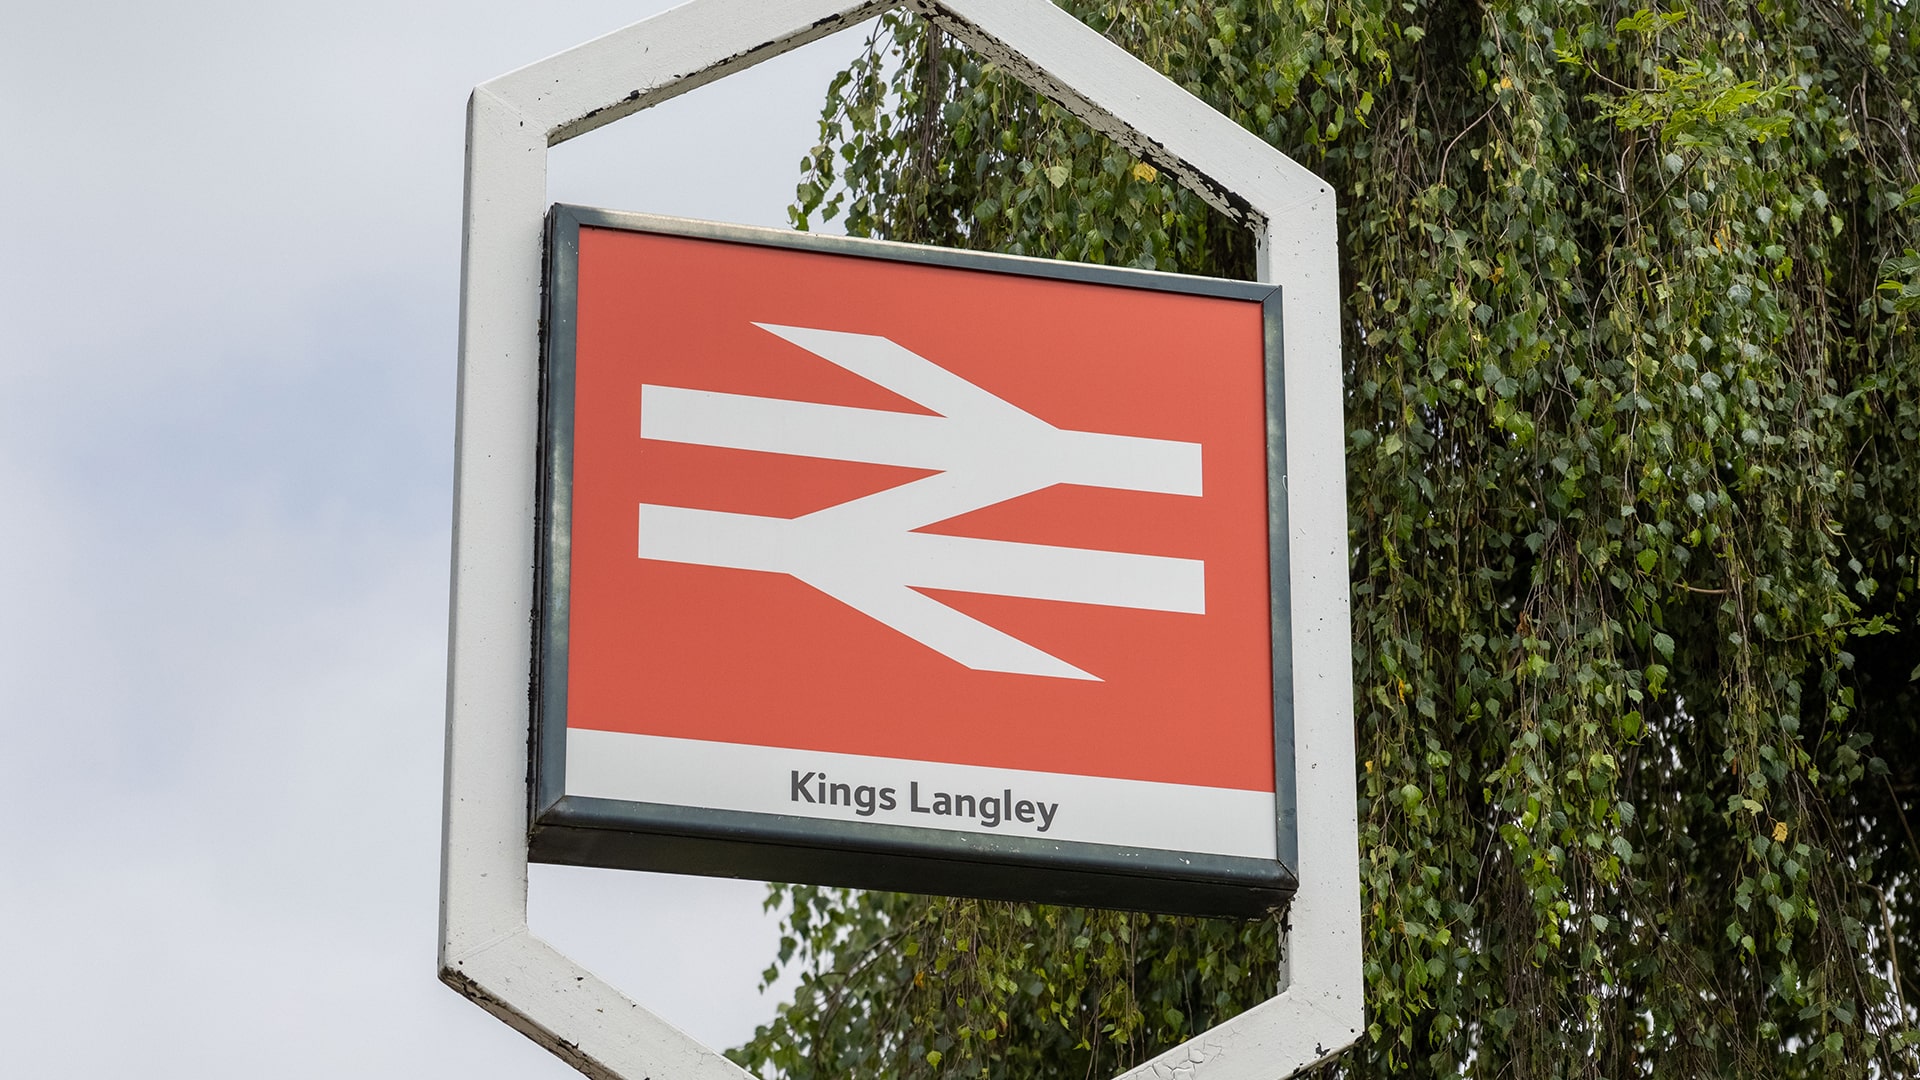 Kings Langley Station